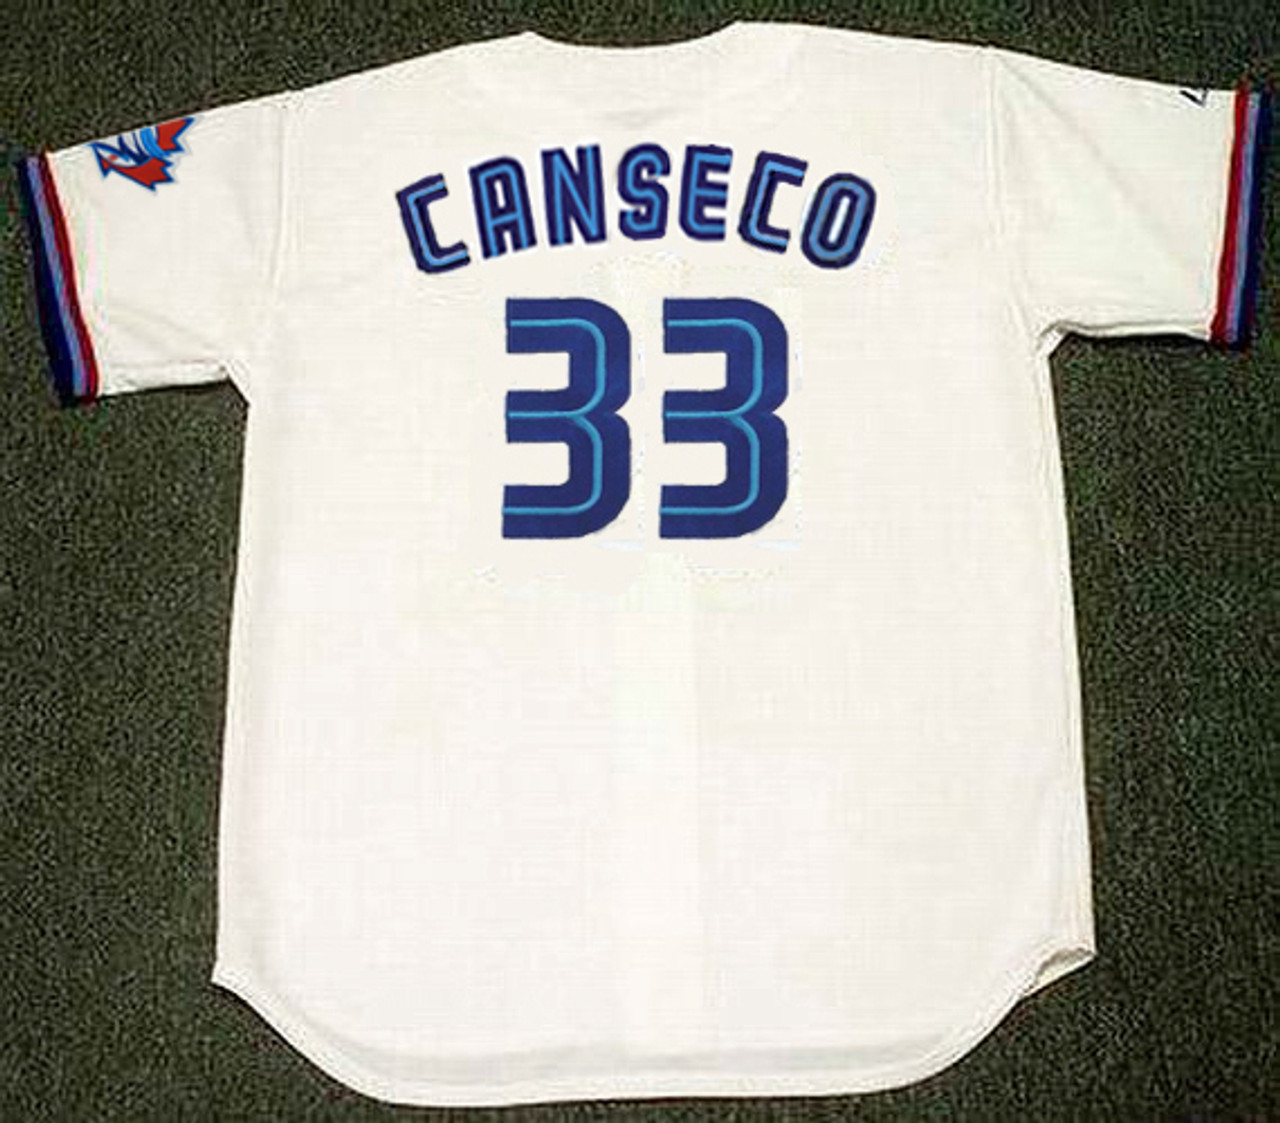 Jose Canseco Signed Oakland A's White Majestic Replica Baseball